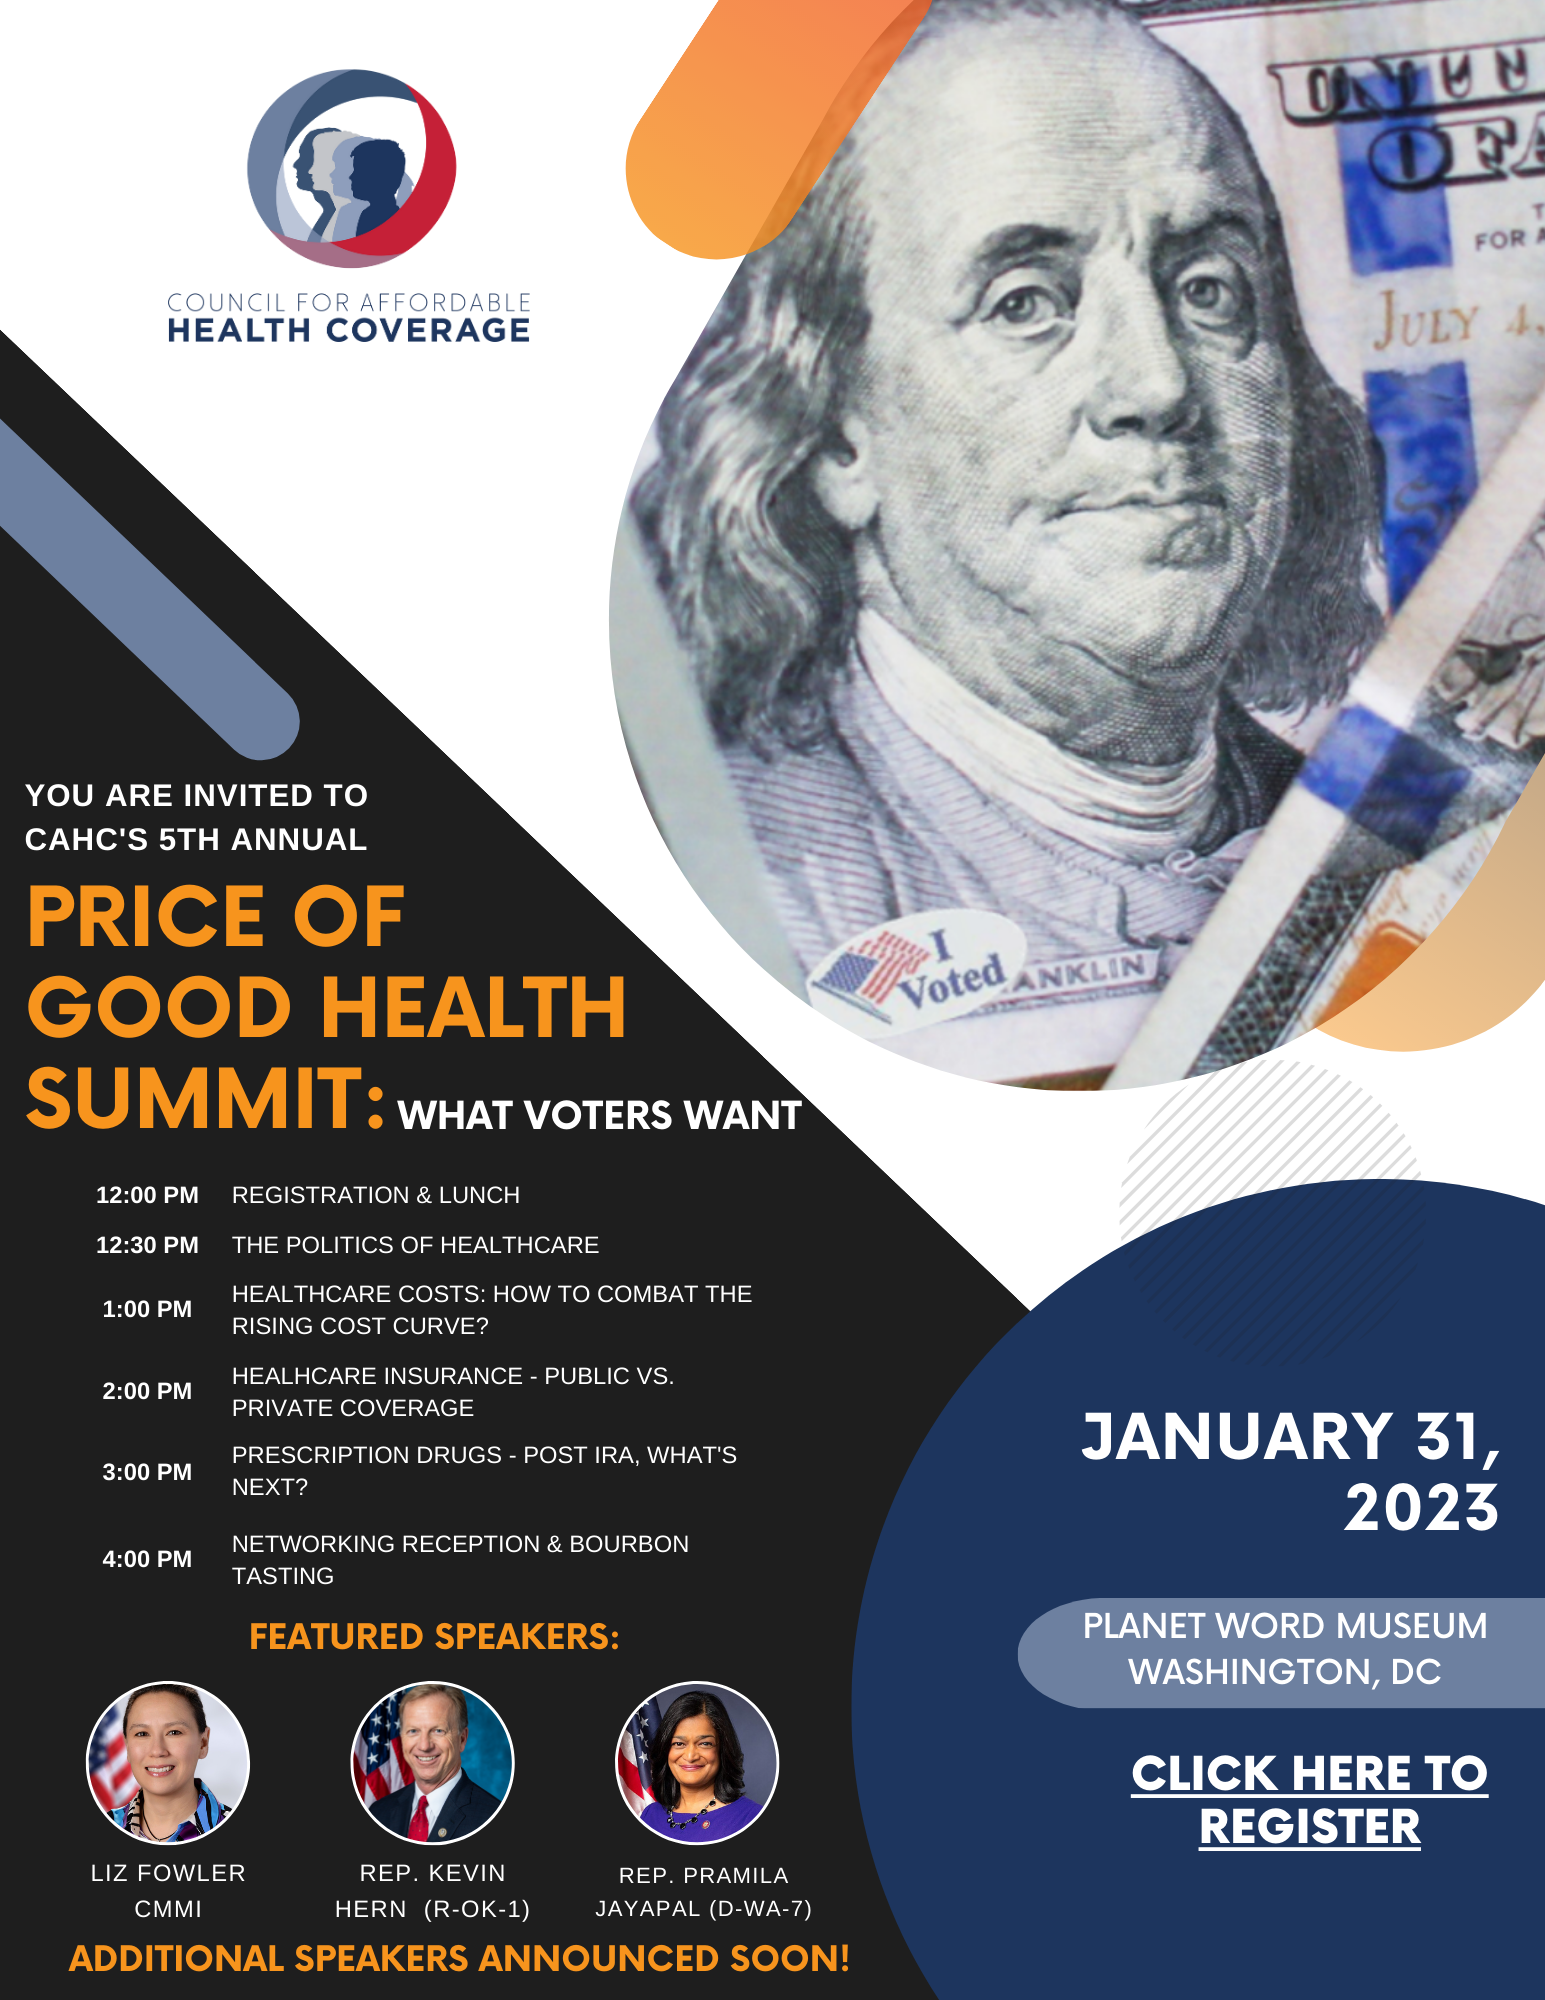 Invitation to the Price of Good Health Summit on January 31st, 2023.